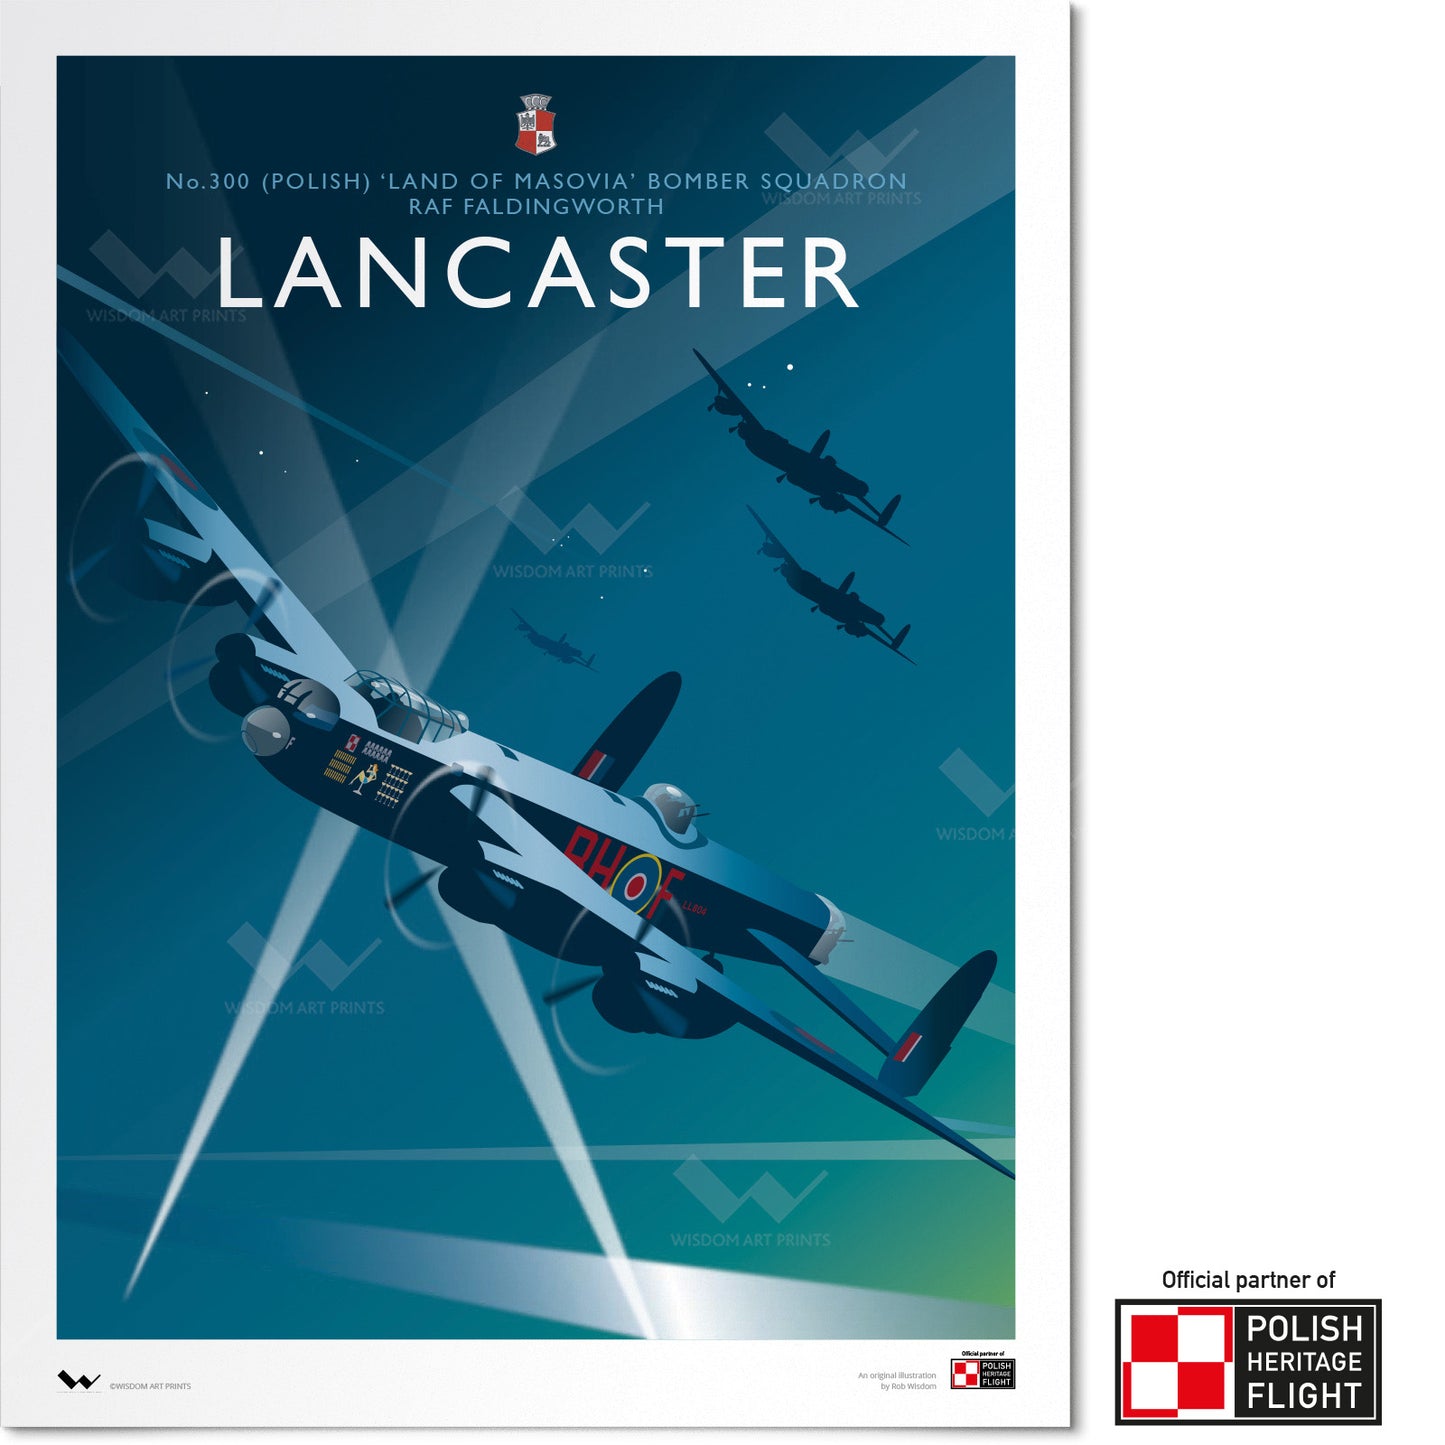 Illustration of the Avro Lancaster, as flown by No. 300 (Polish) Squadron RAF from RAF Faldingworth